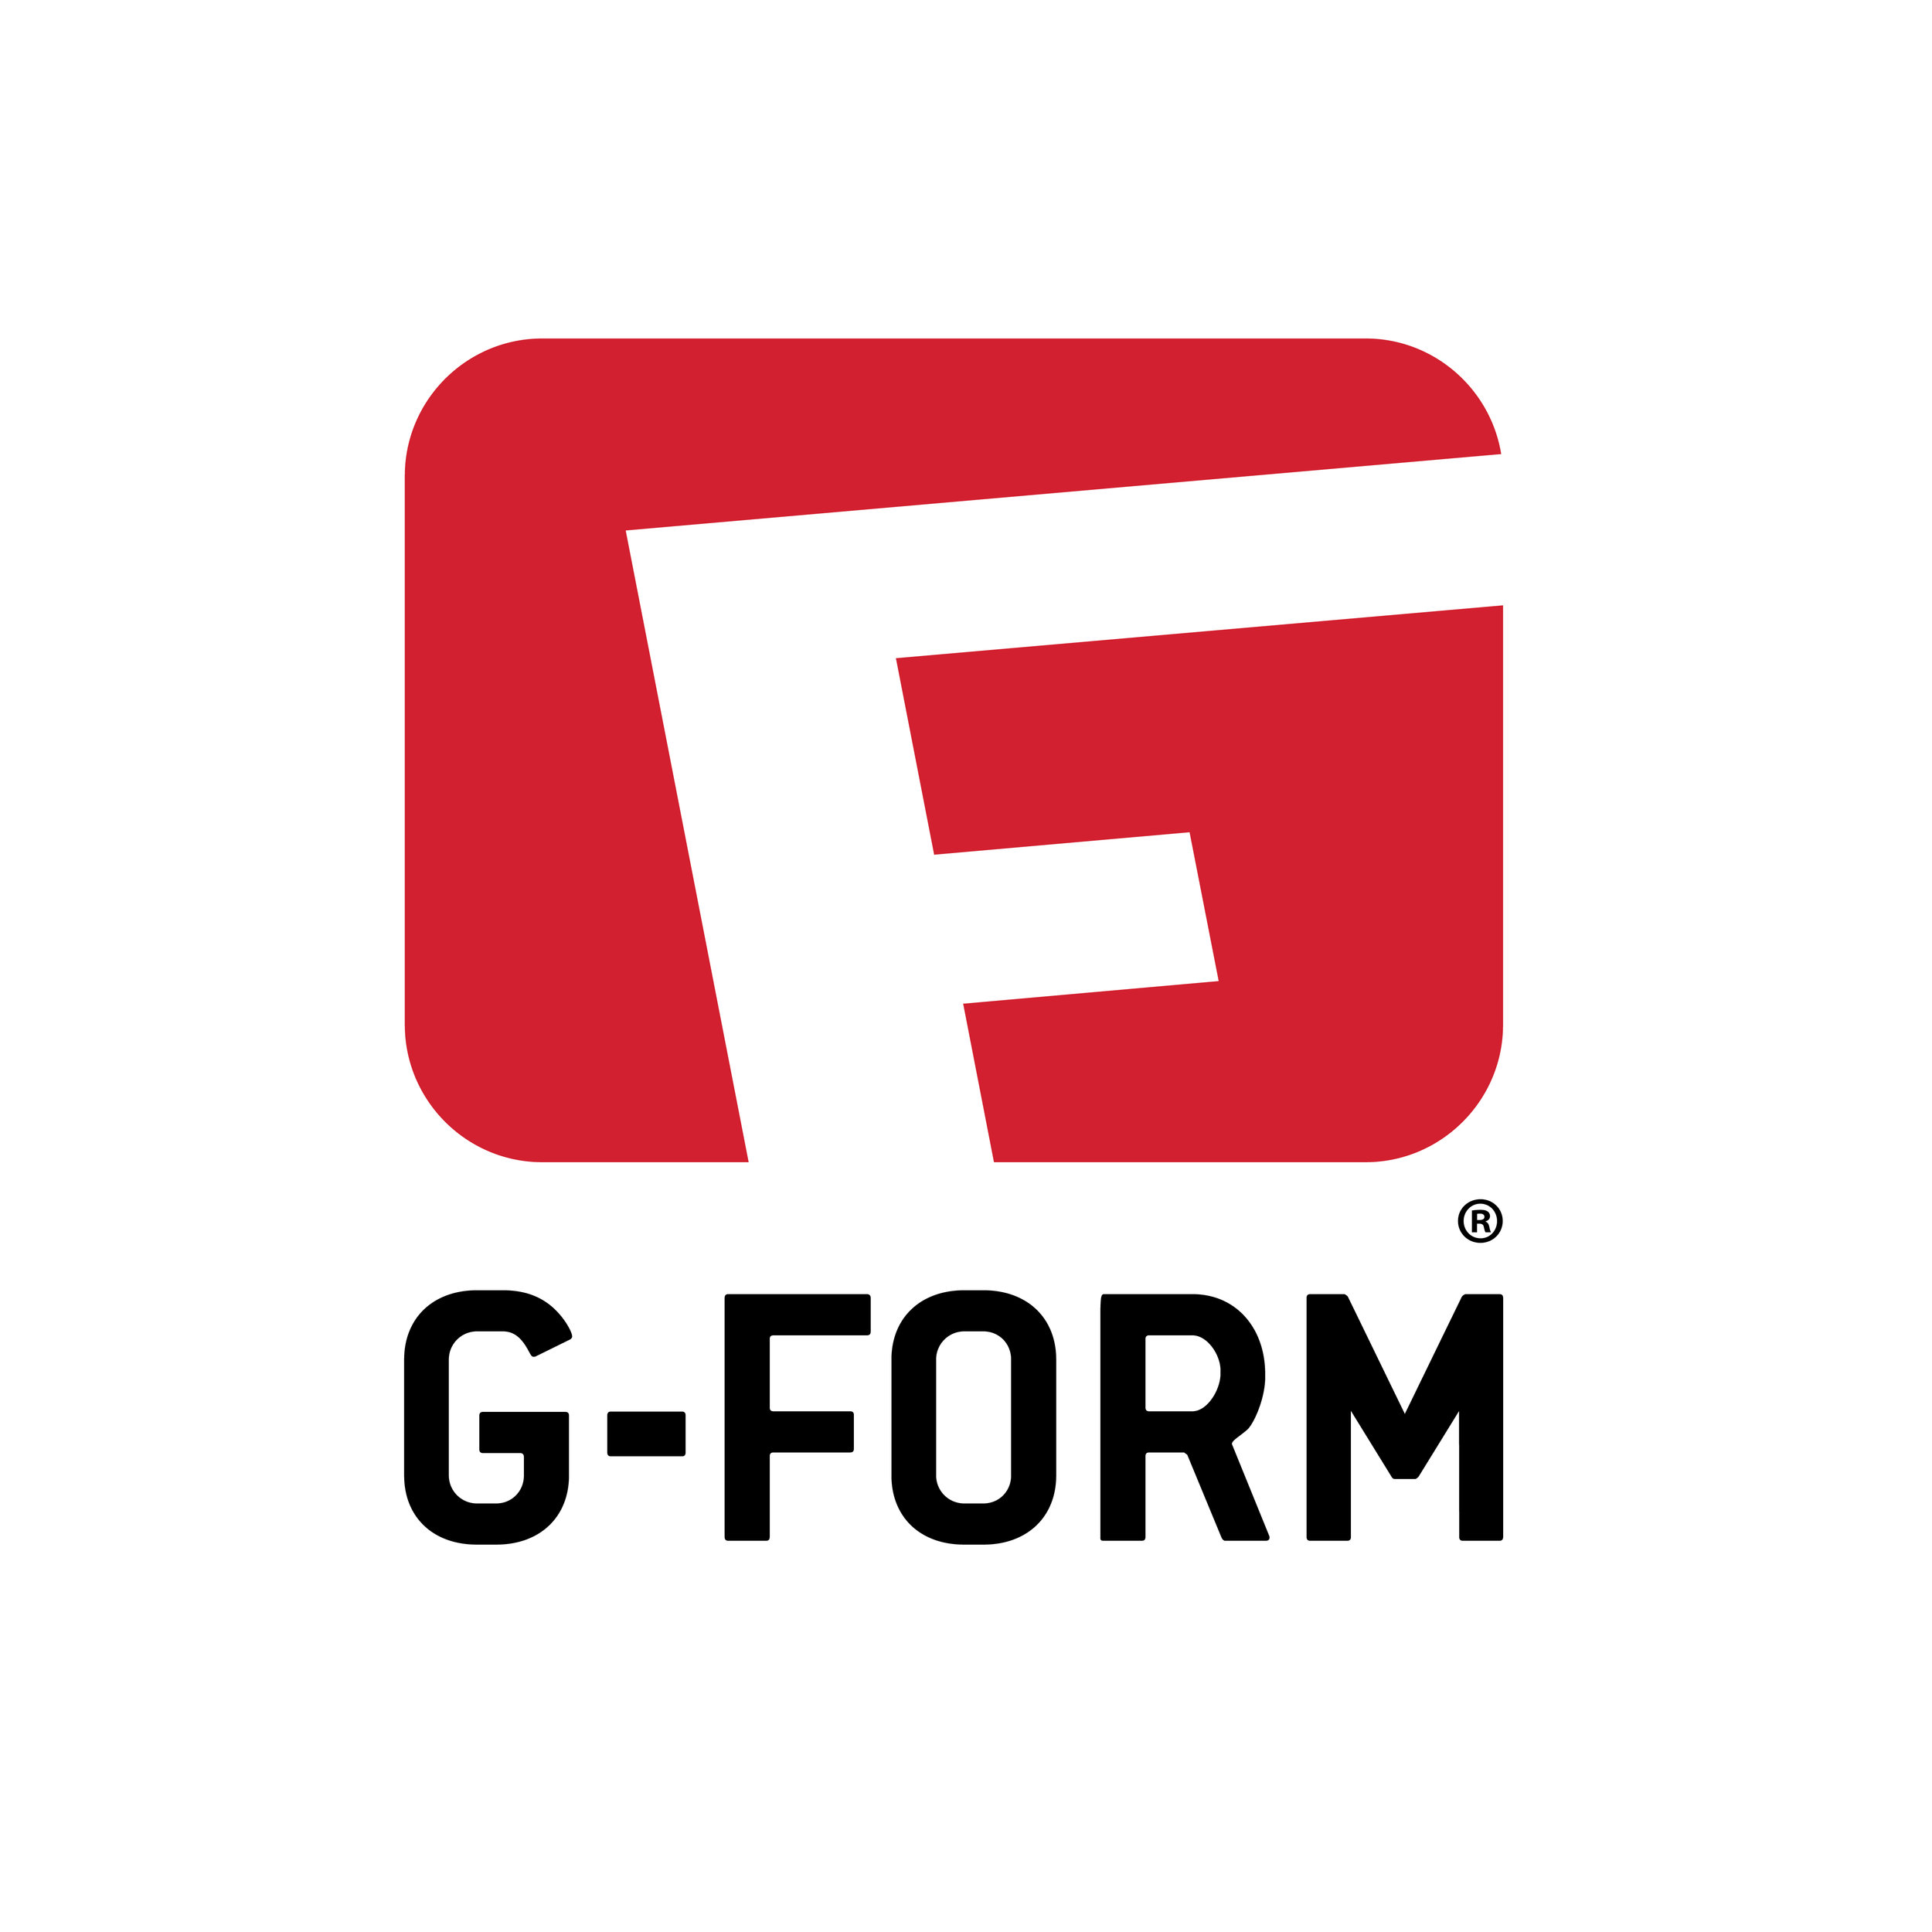 G-FormVertLogo(186-Blk)R.jpg